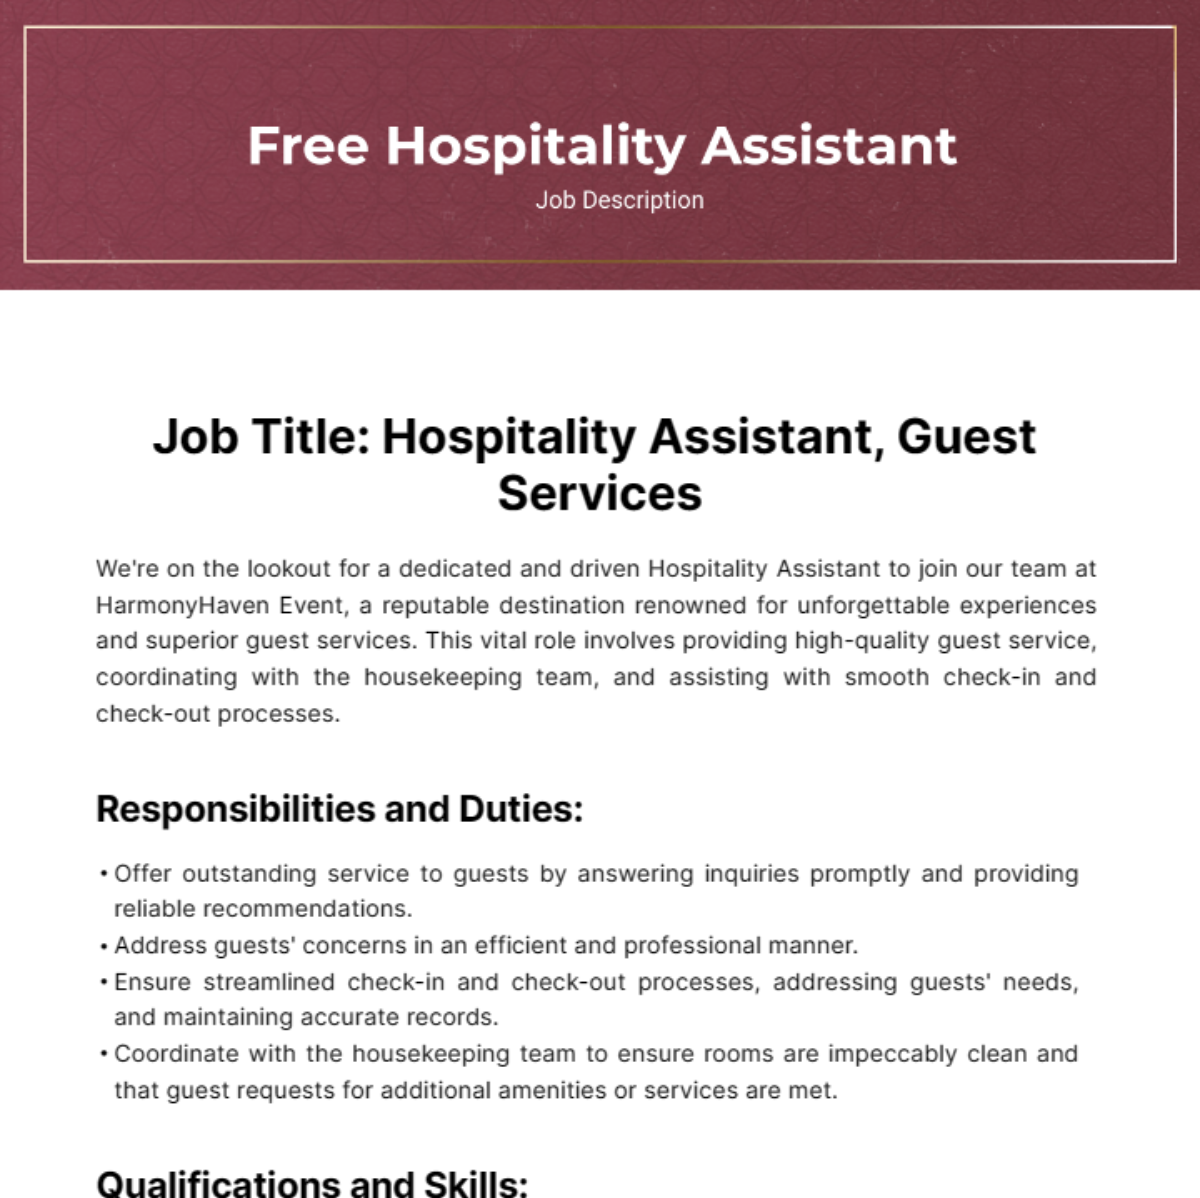 Free Hospitality Assistant Job Description Template